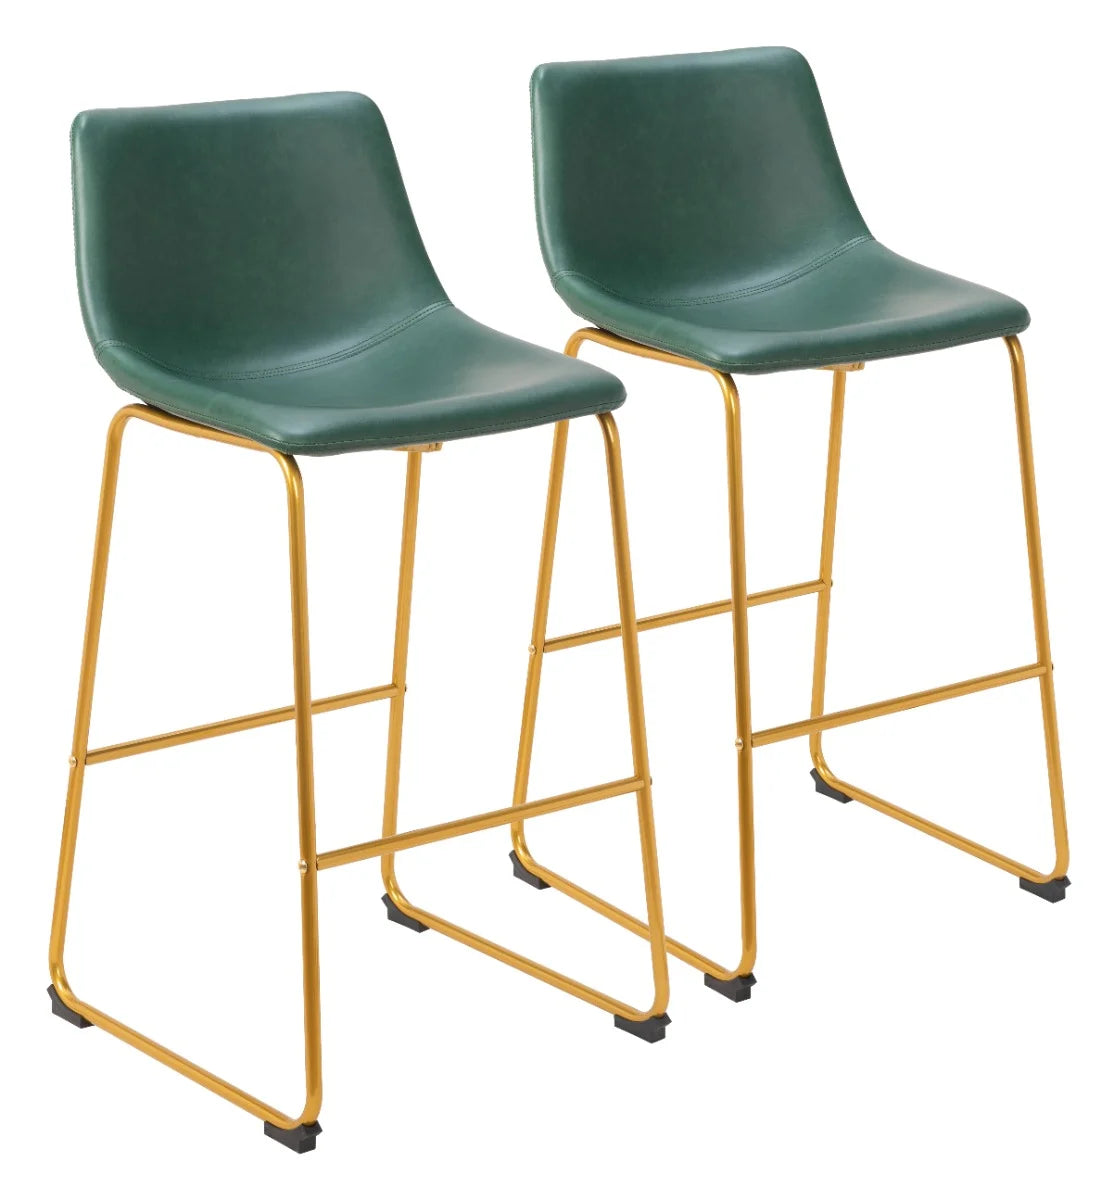 Set of 2 modern green stools